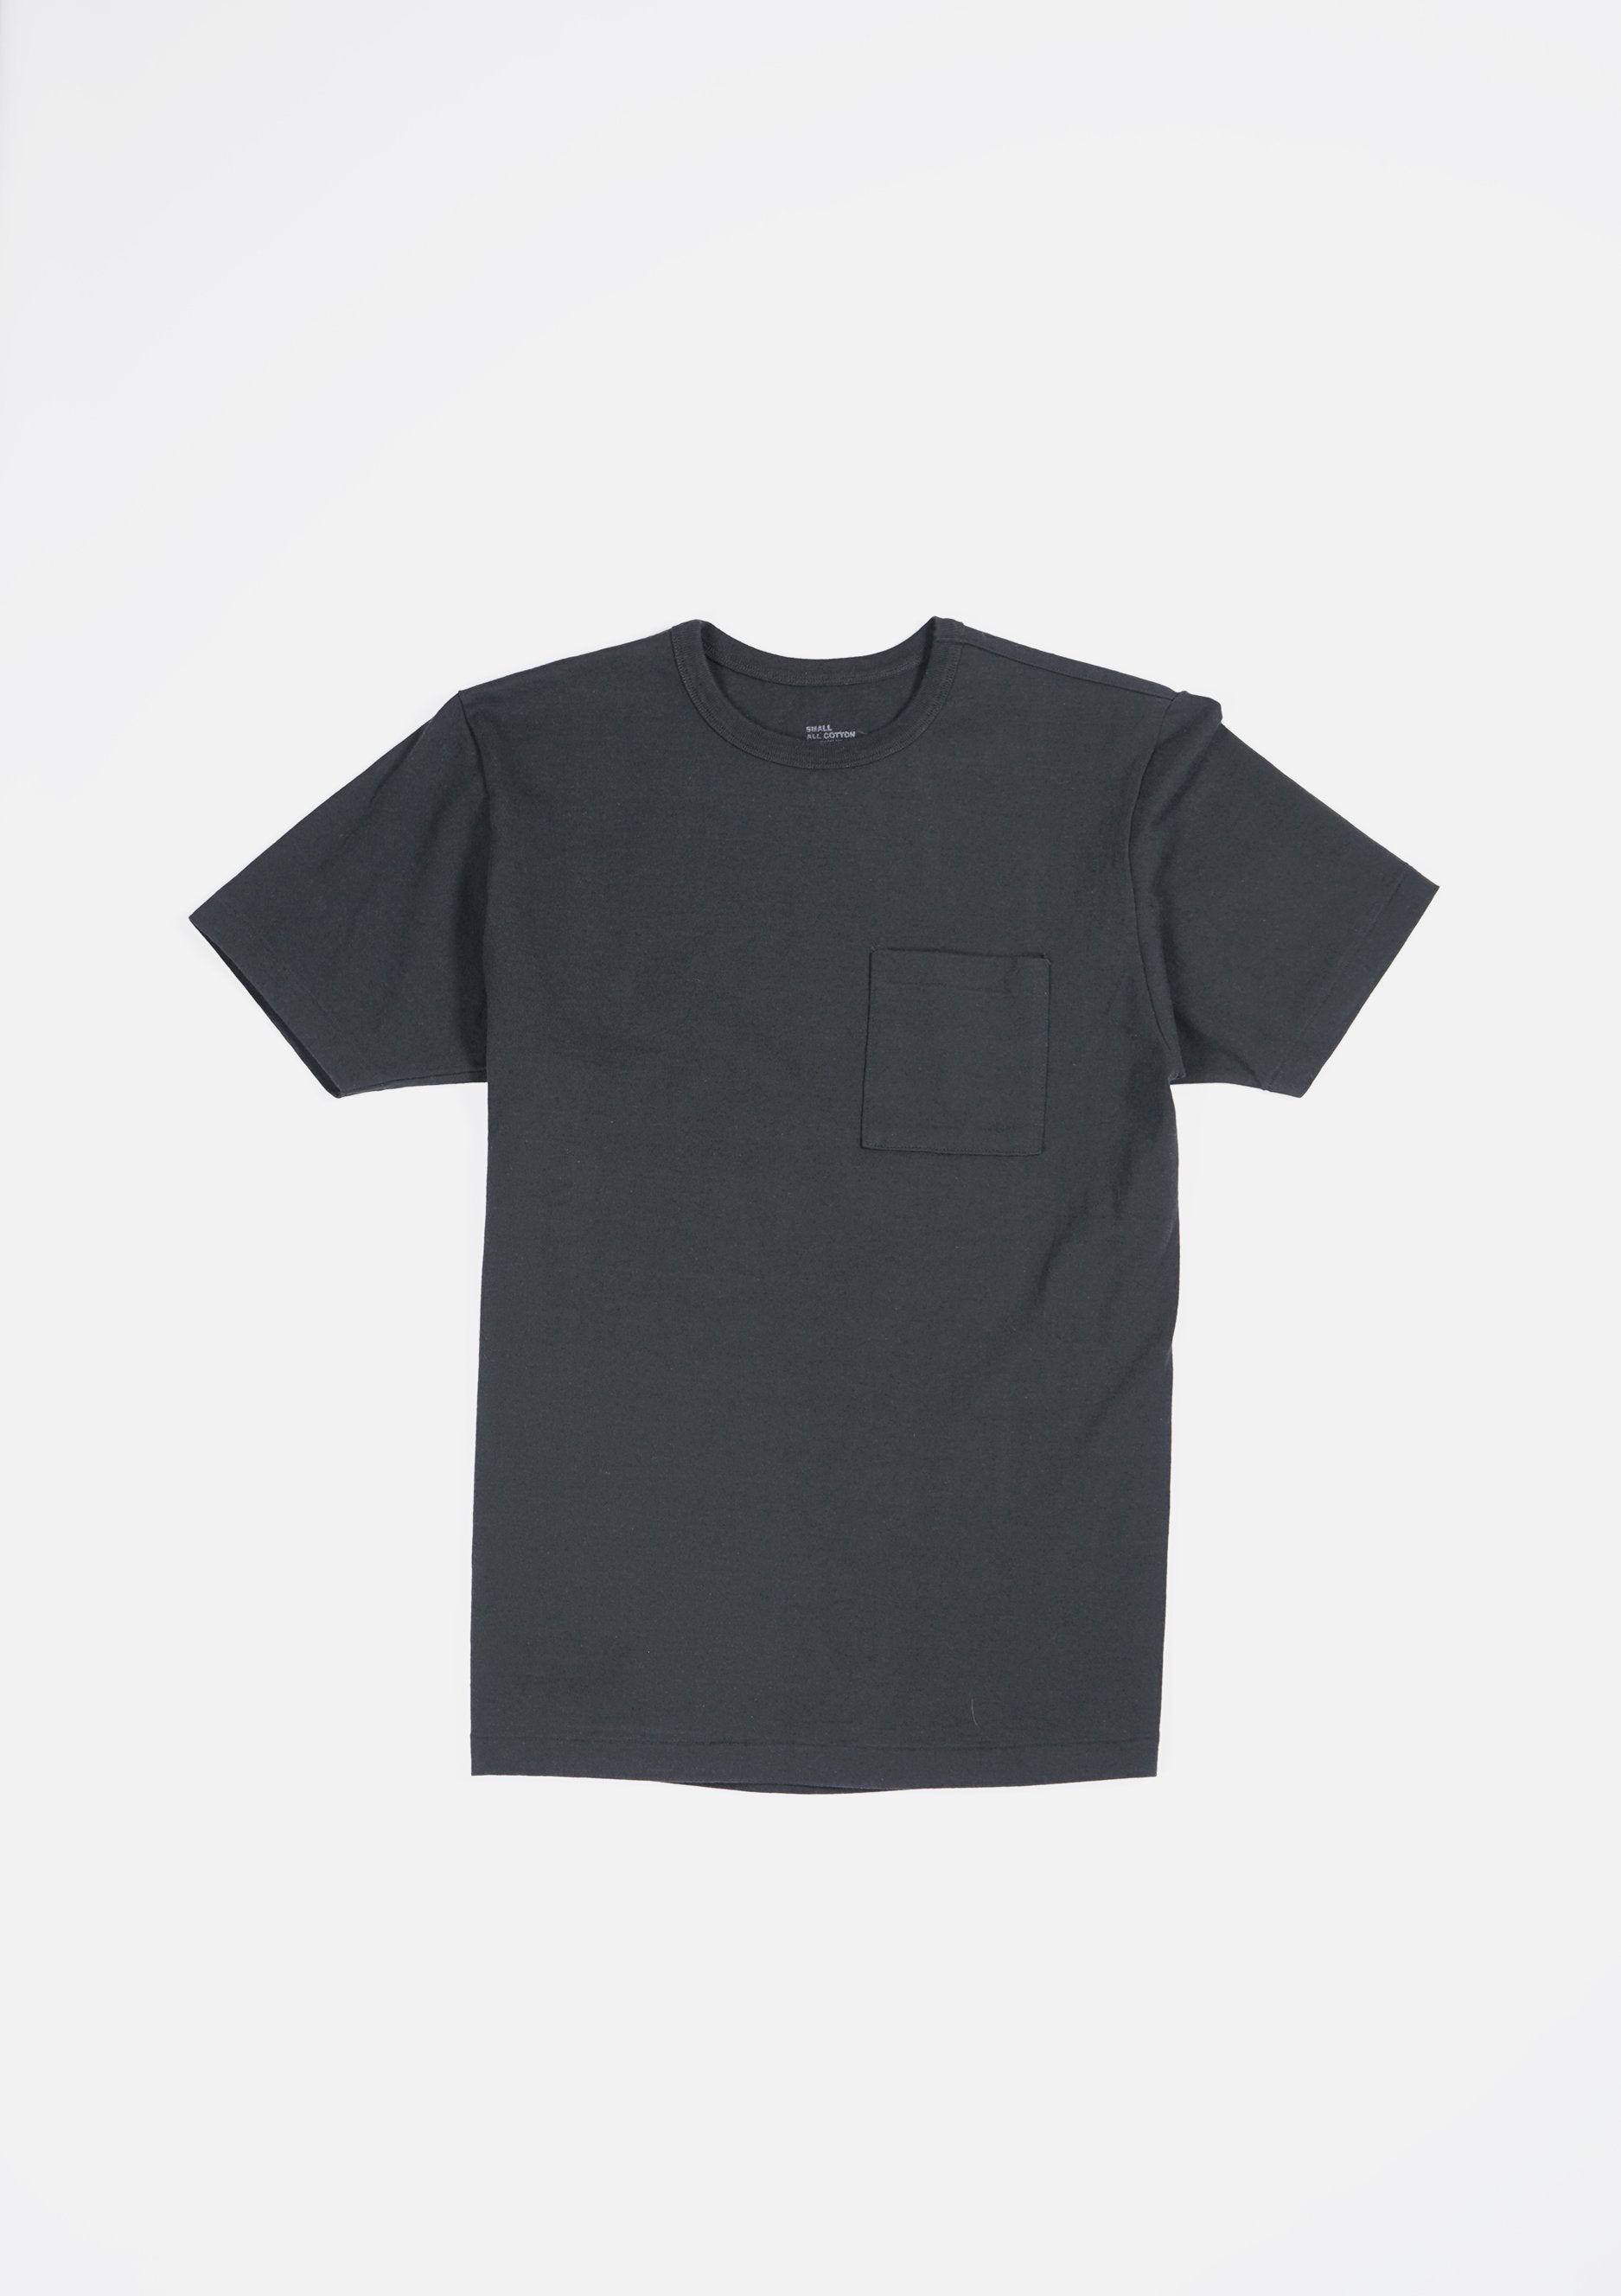 3-Pack Heavyweight Pocket T-shirts Black (You Save 10%)